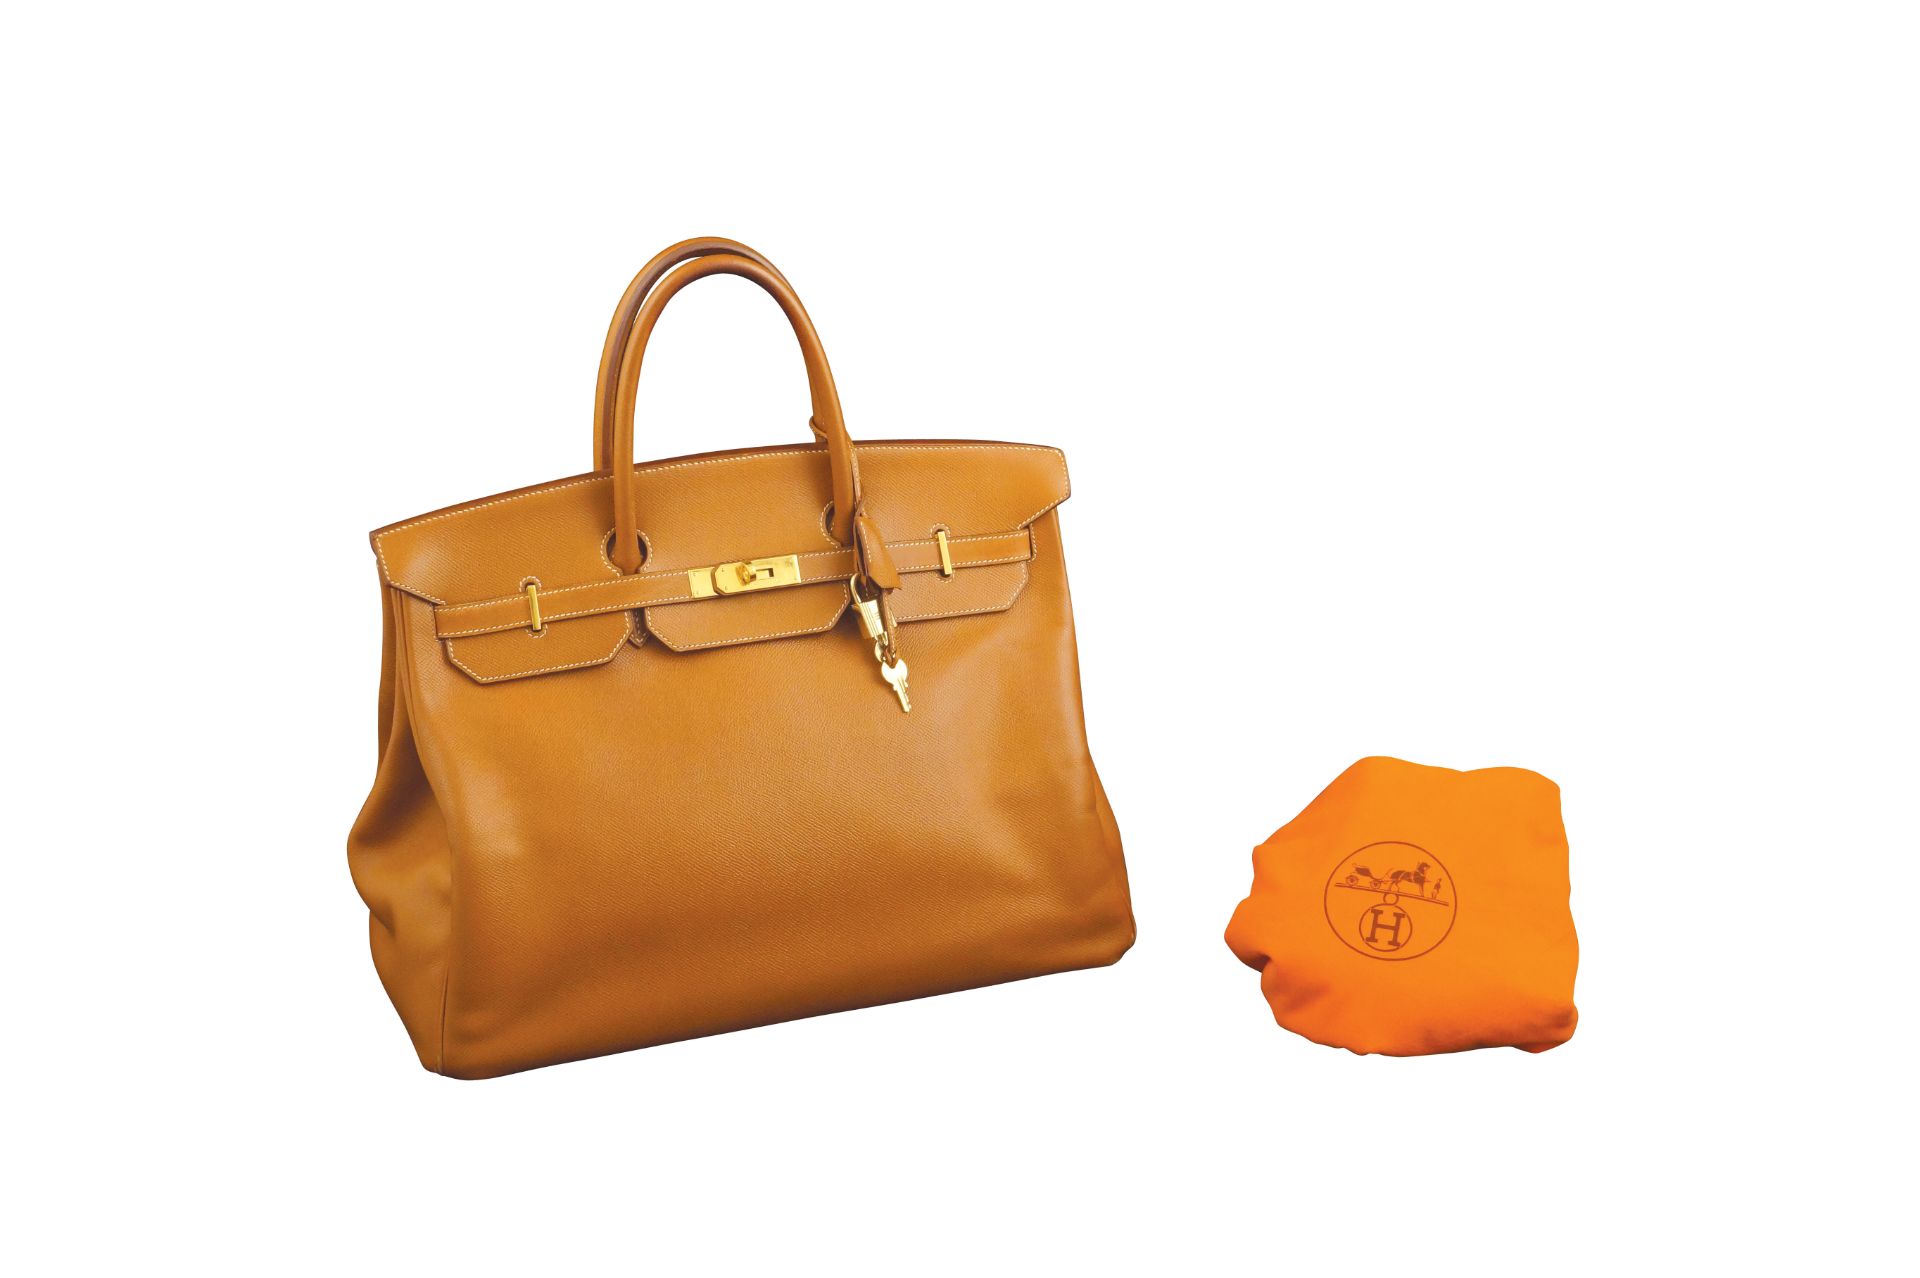 A Hermes Birkin courchevel gold leather handbag